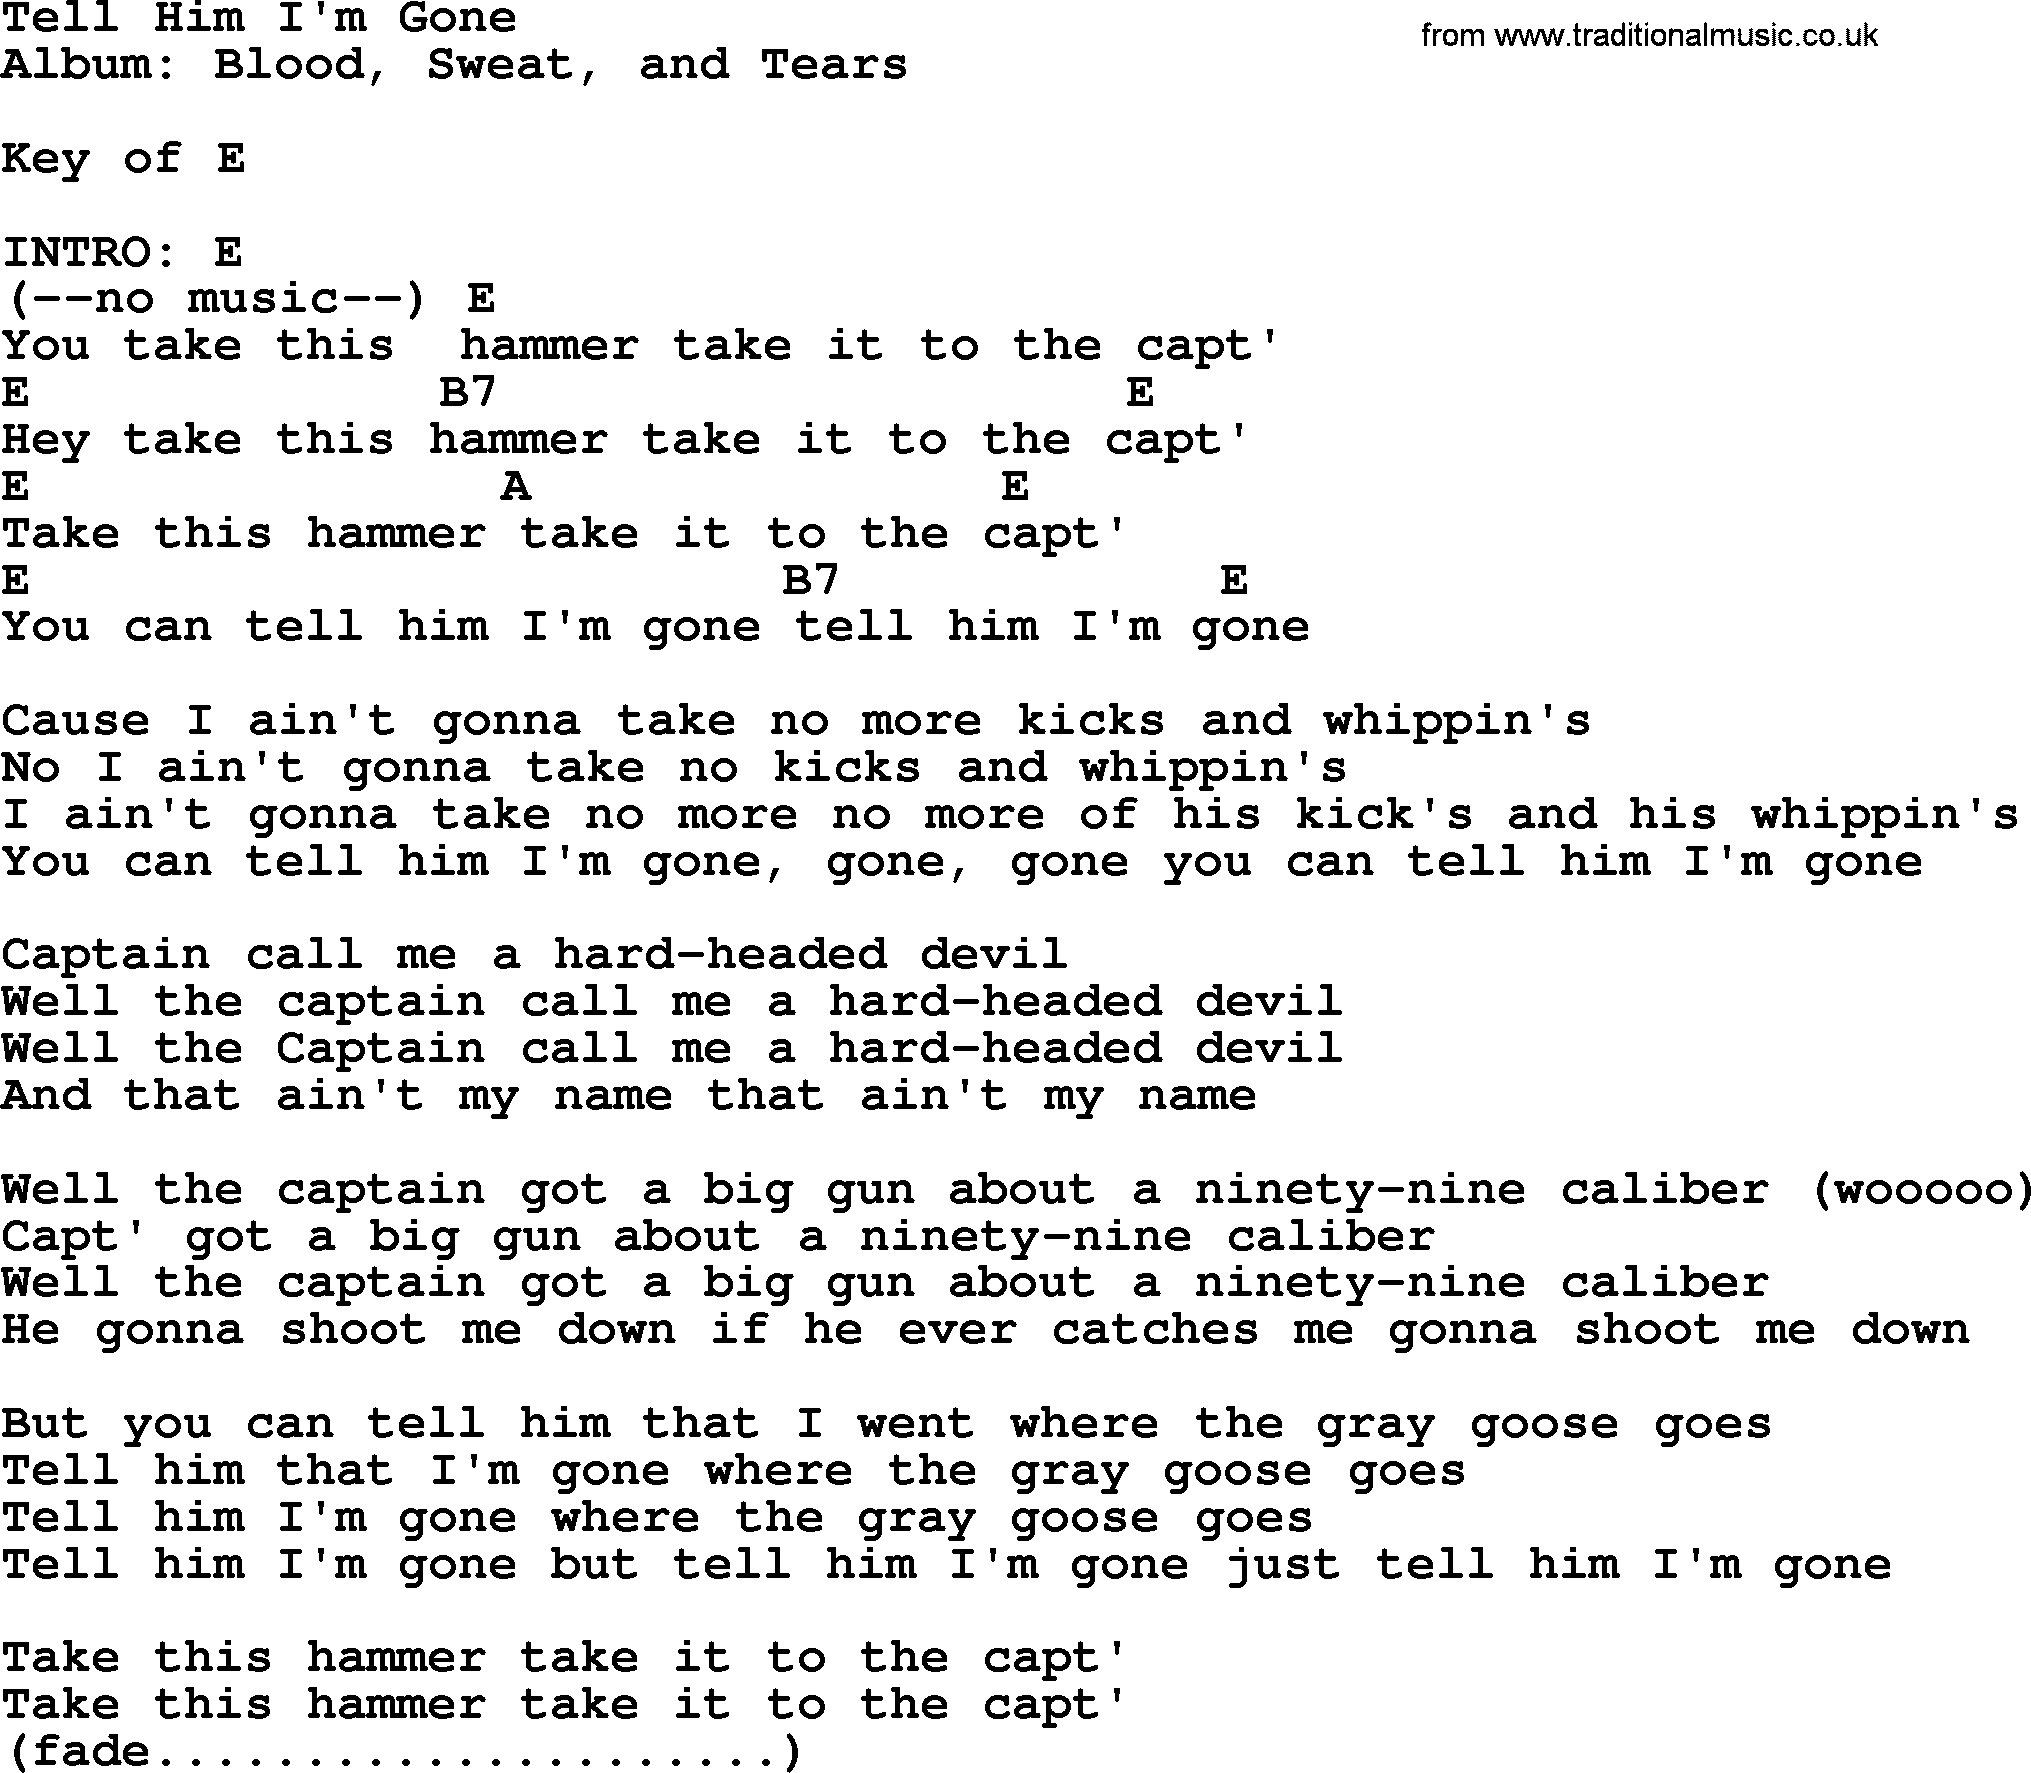 Johnny Cash song Tell Him I'm Gone, lyrics and chords